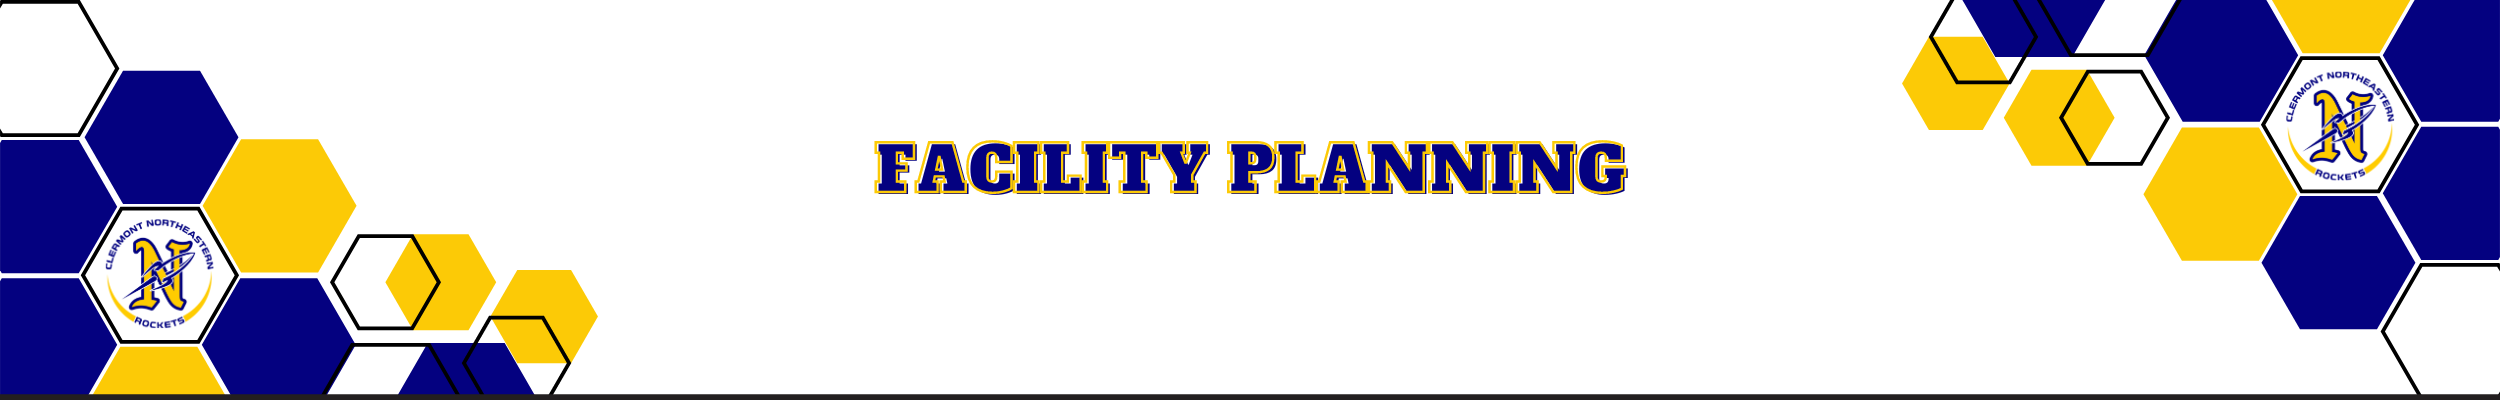 facilities planning Logo with facility dog gillis on gym floor